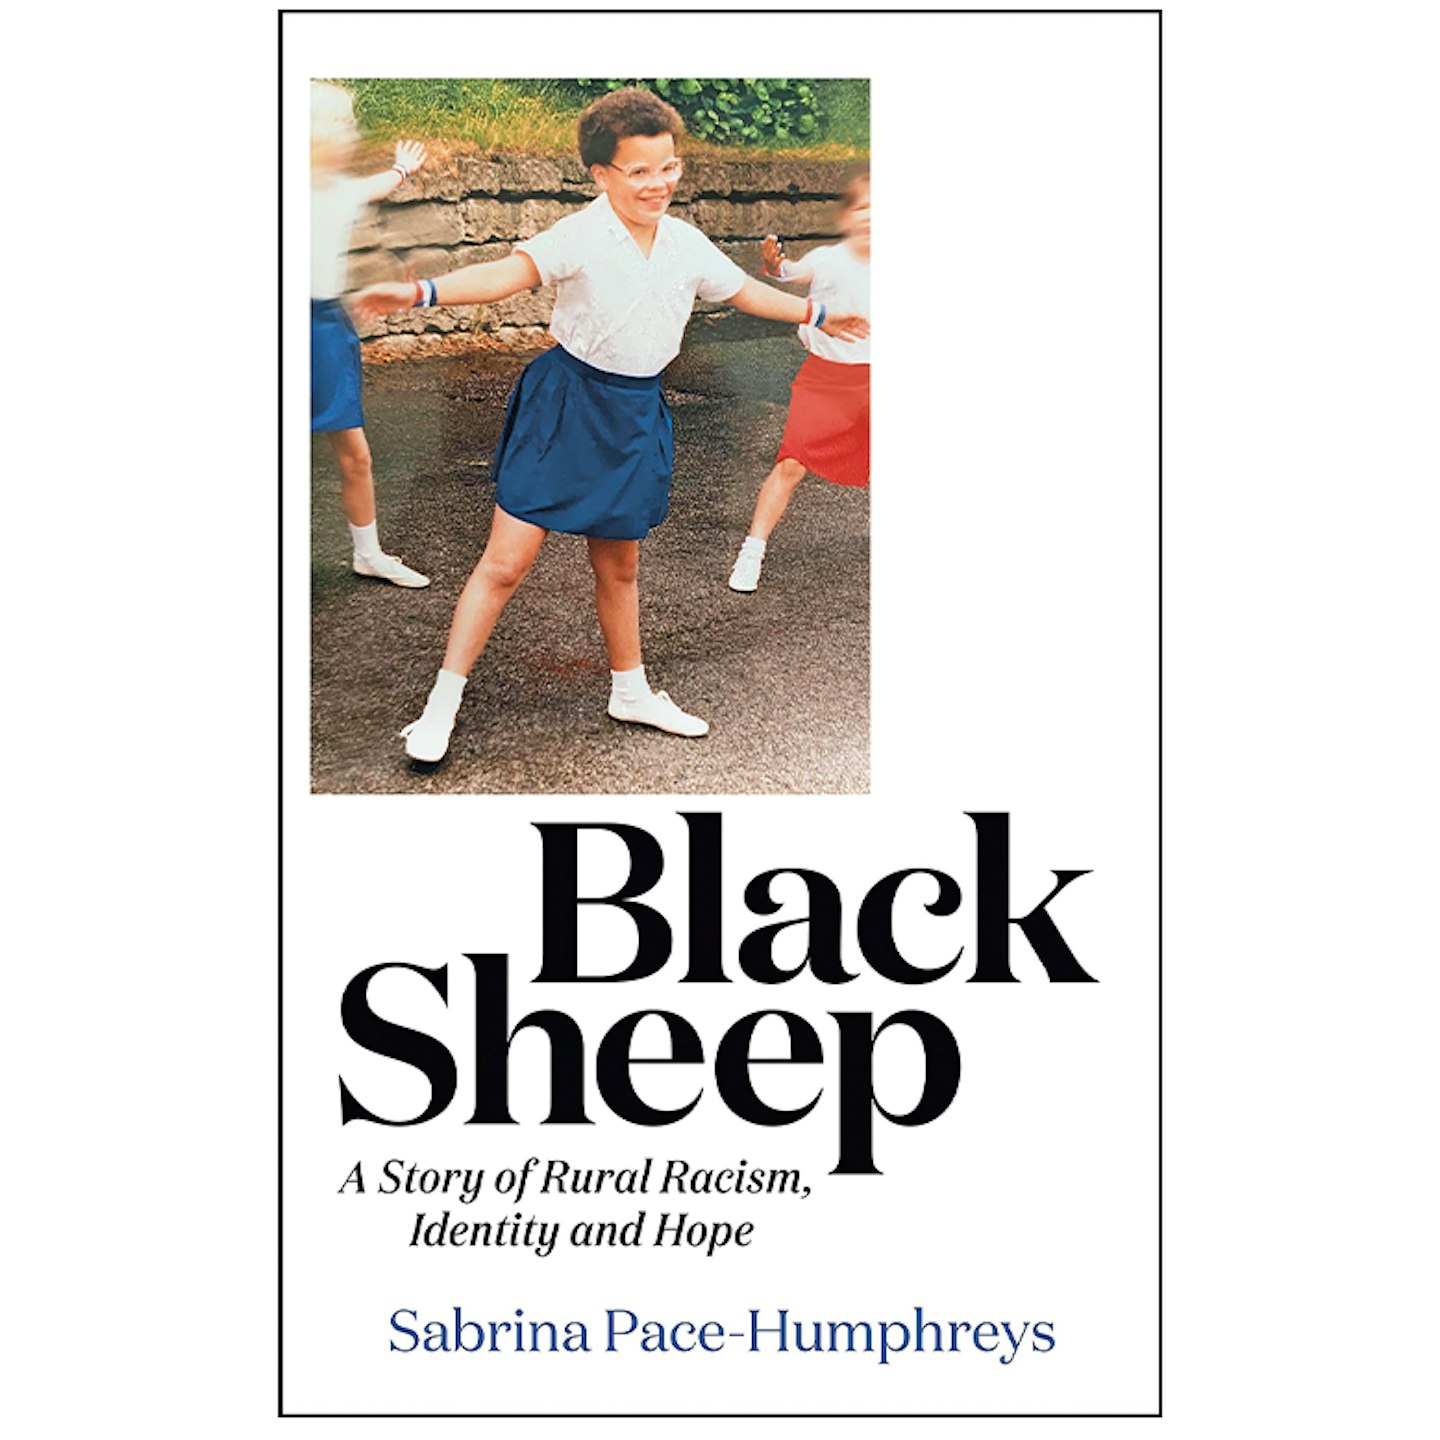 Black Sheep book by sabrina pace-humphries